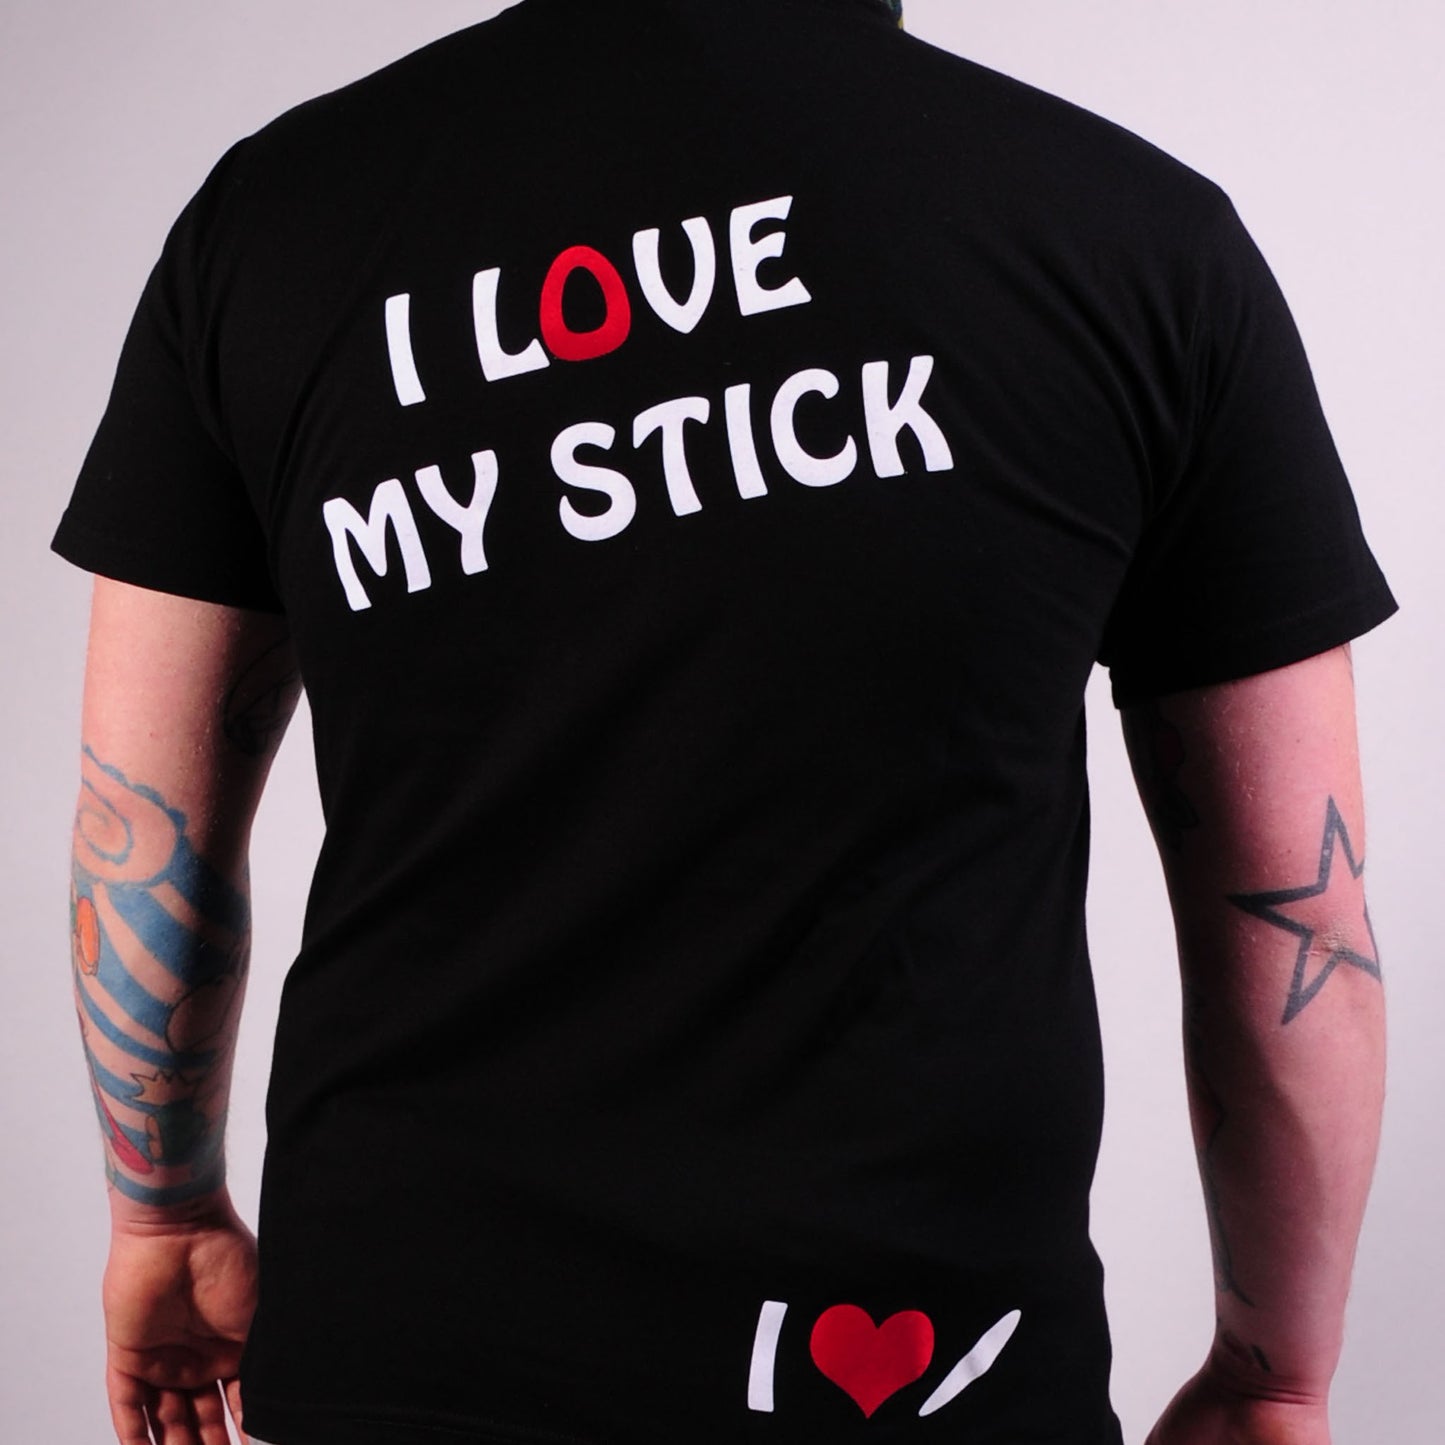 T Shirt "I LOVE MY STICK"